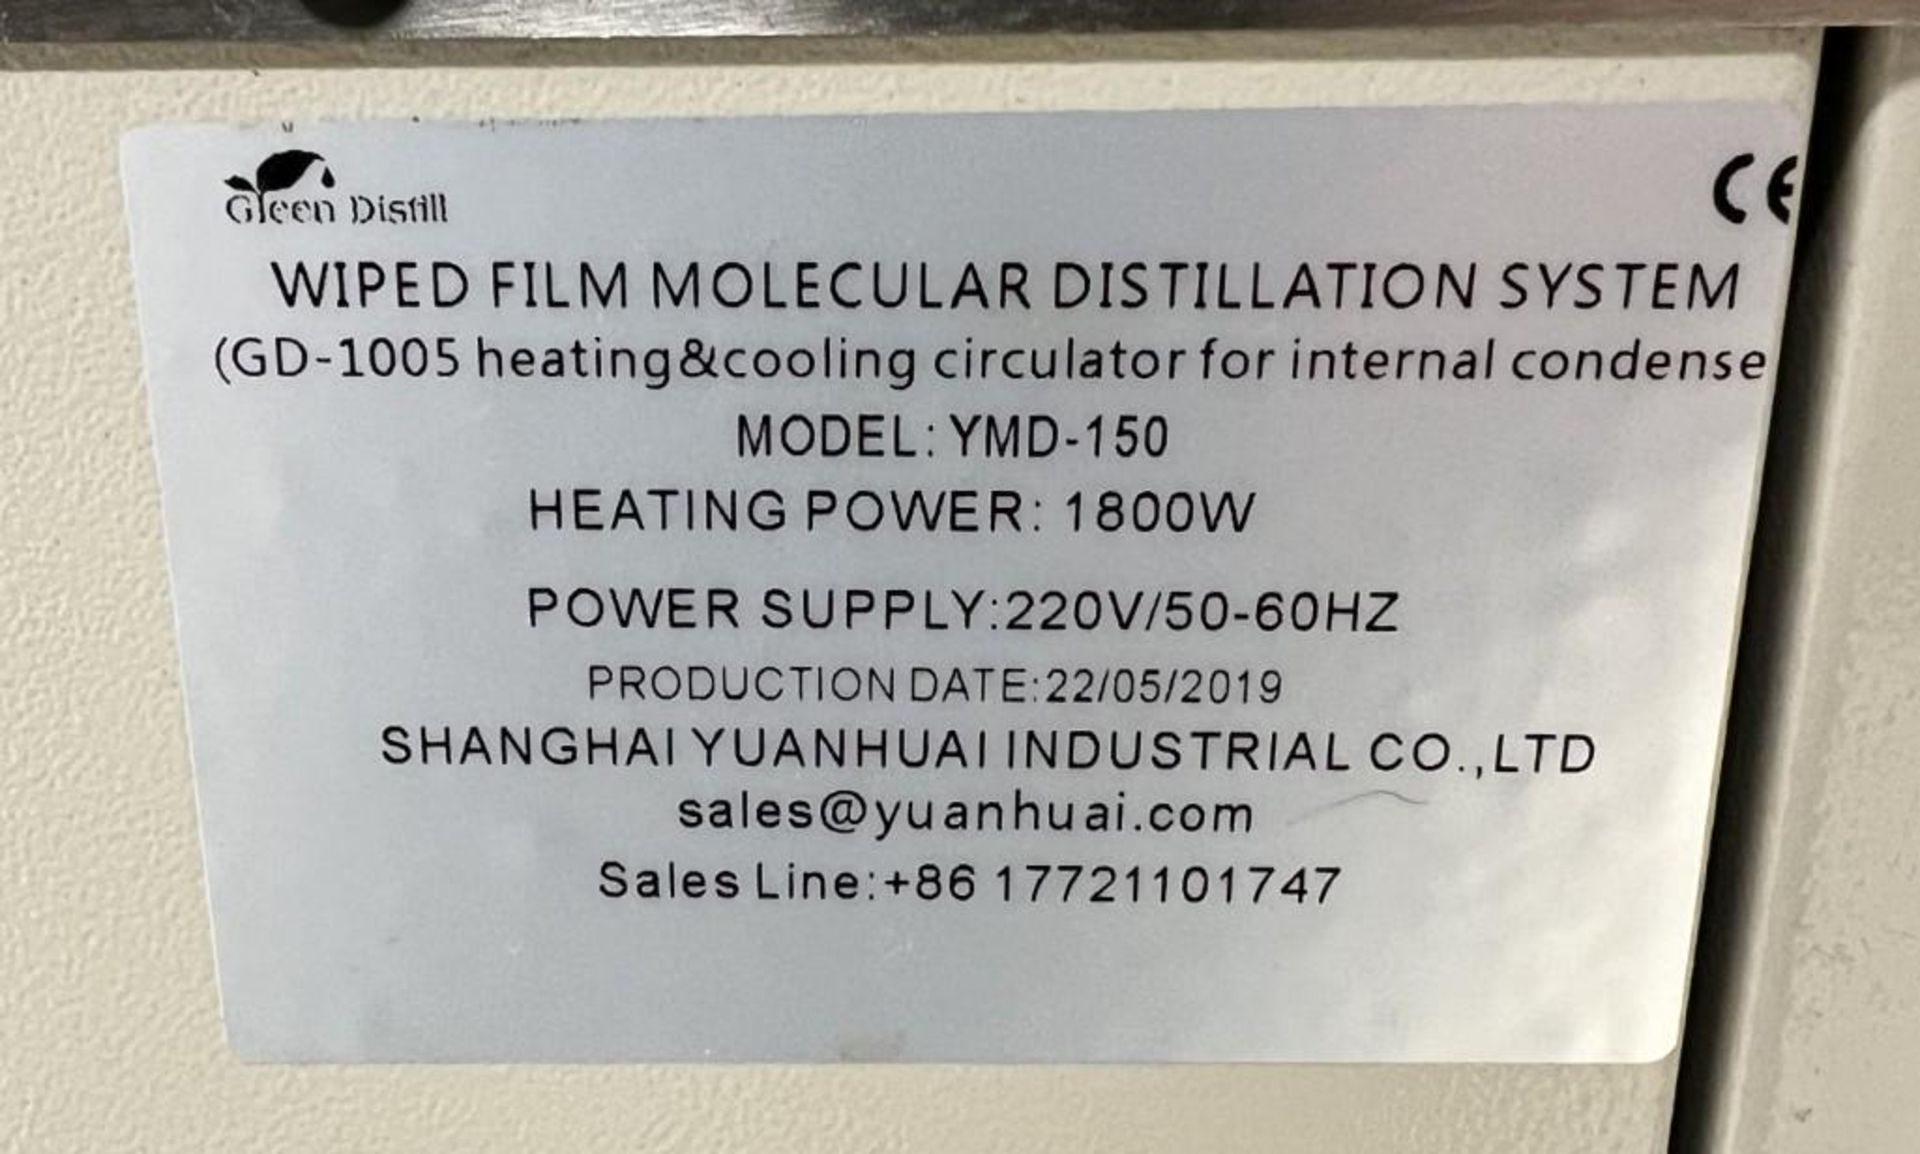 YHCHEM Wiped Film Molecular Distillation System, Model YMD-150, Built 05/2019. With misc. glass, vac - Image 11 of 29